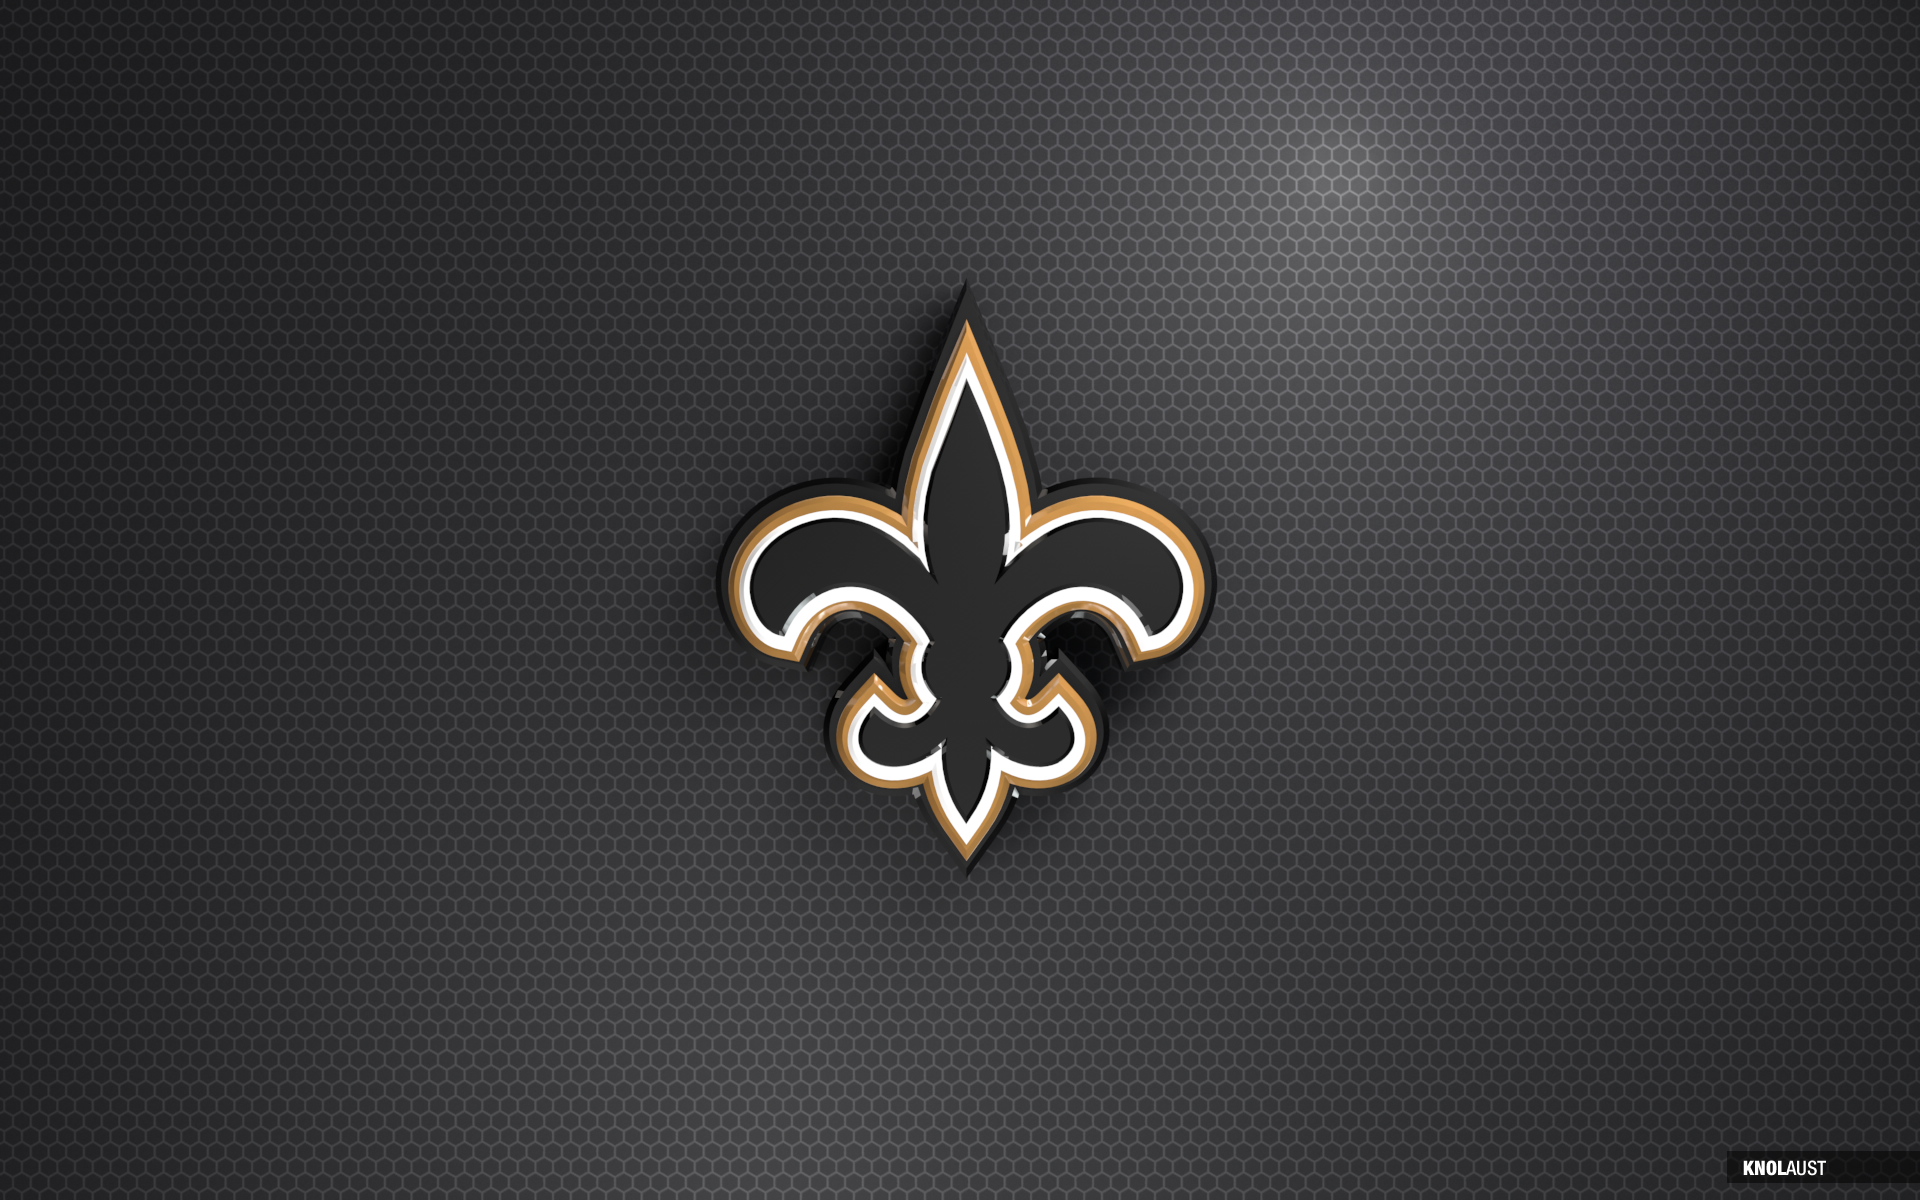 New Orleans Saints background image